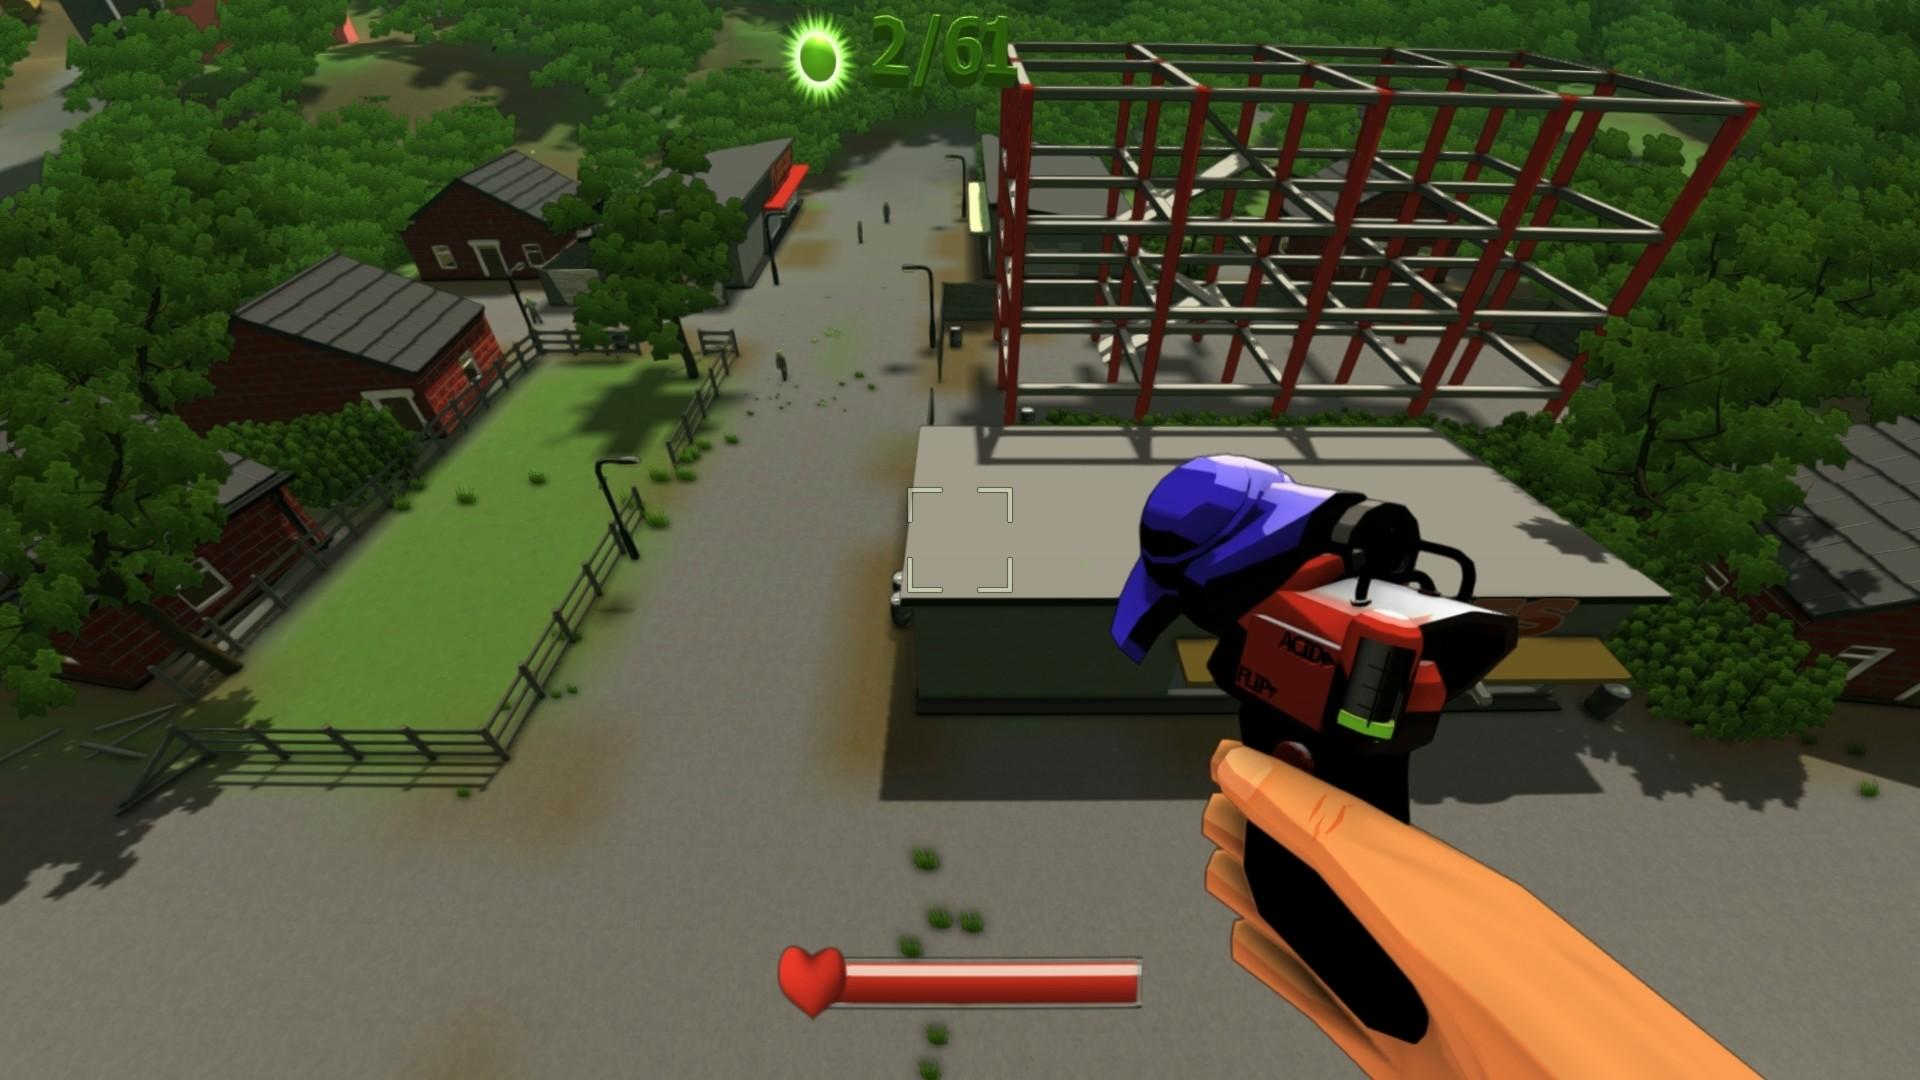 Screenshot №6 from game Acid Flip